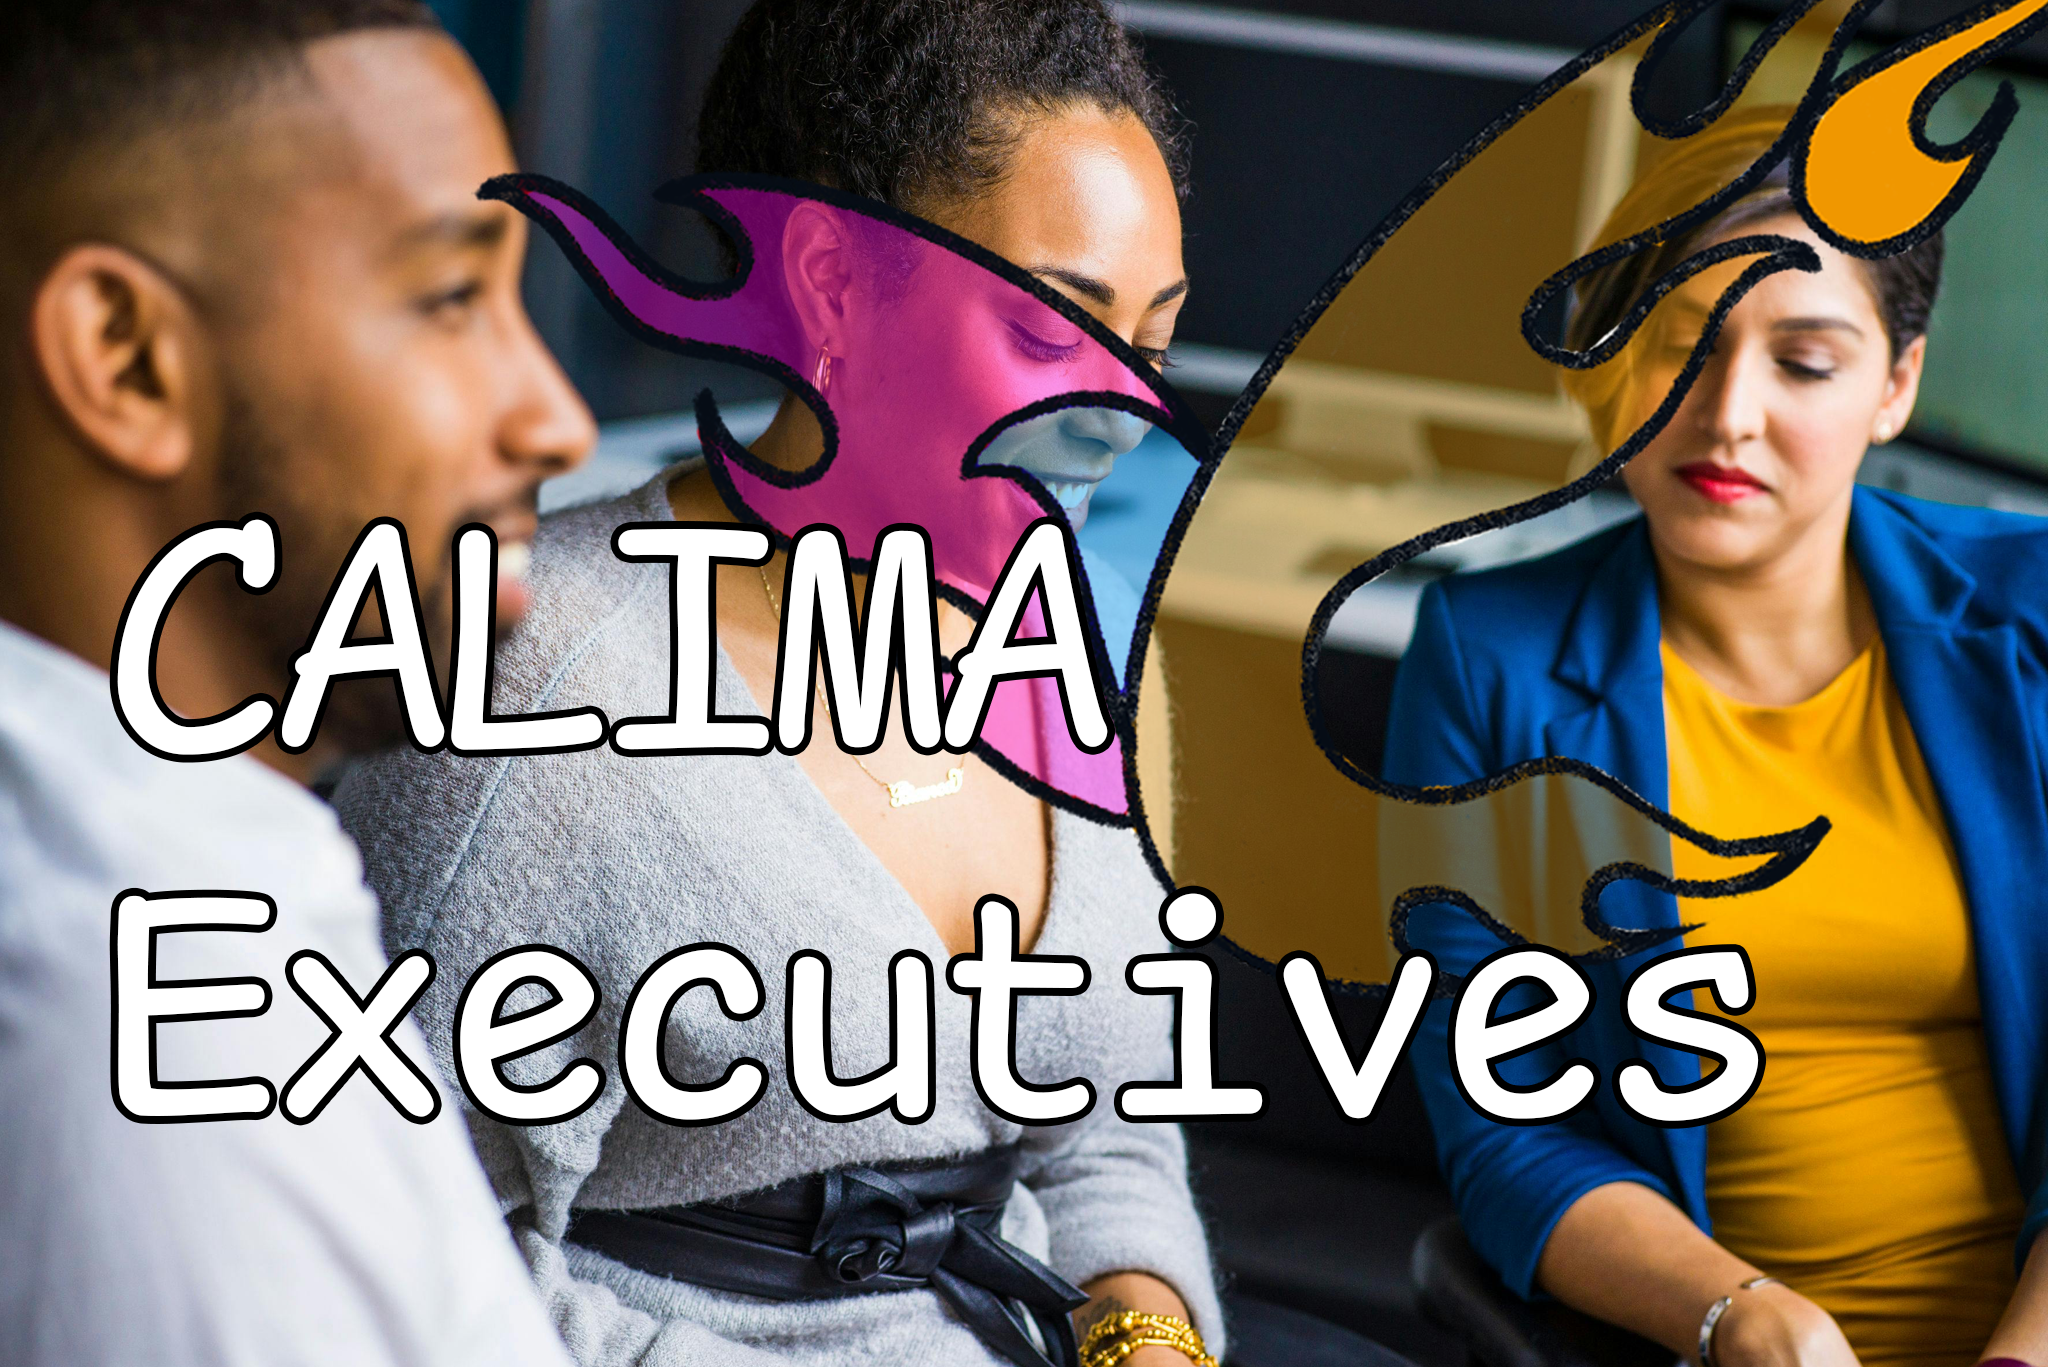 Calima Fractional Executives